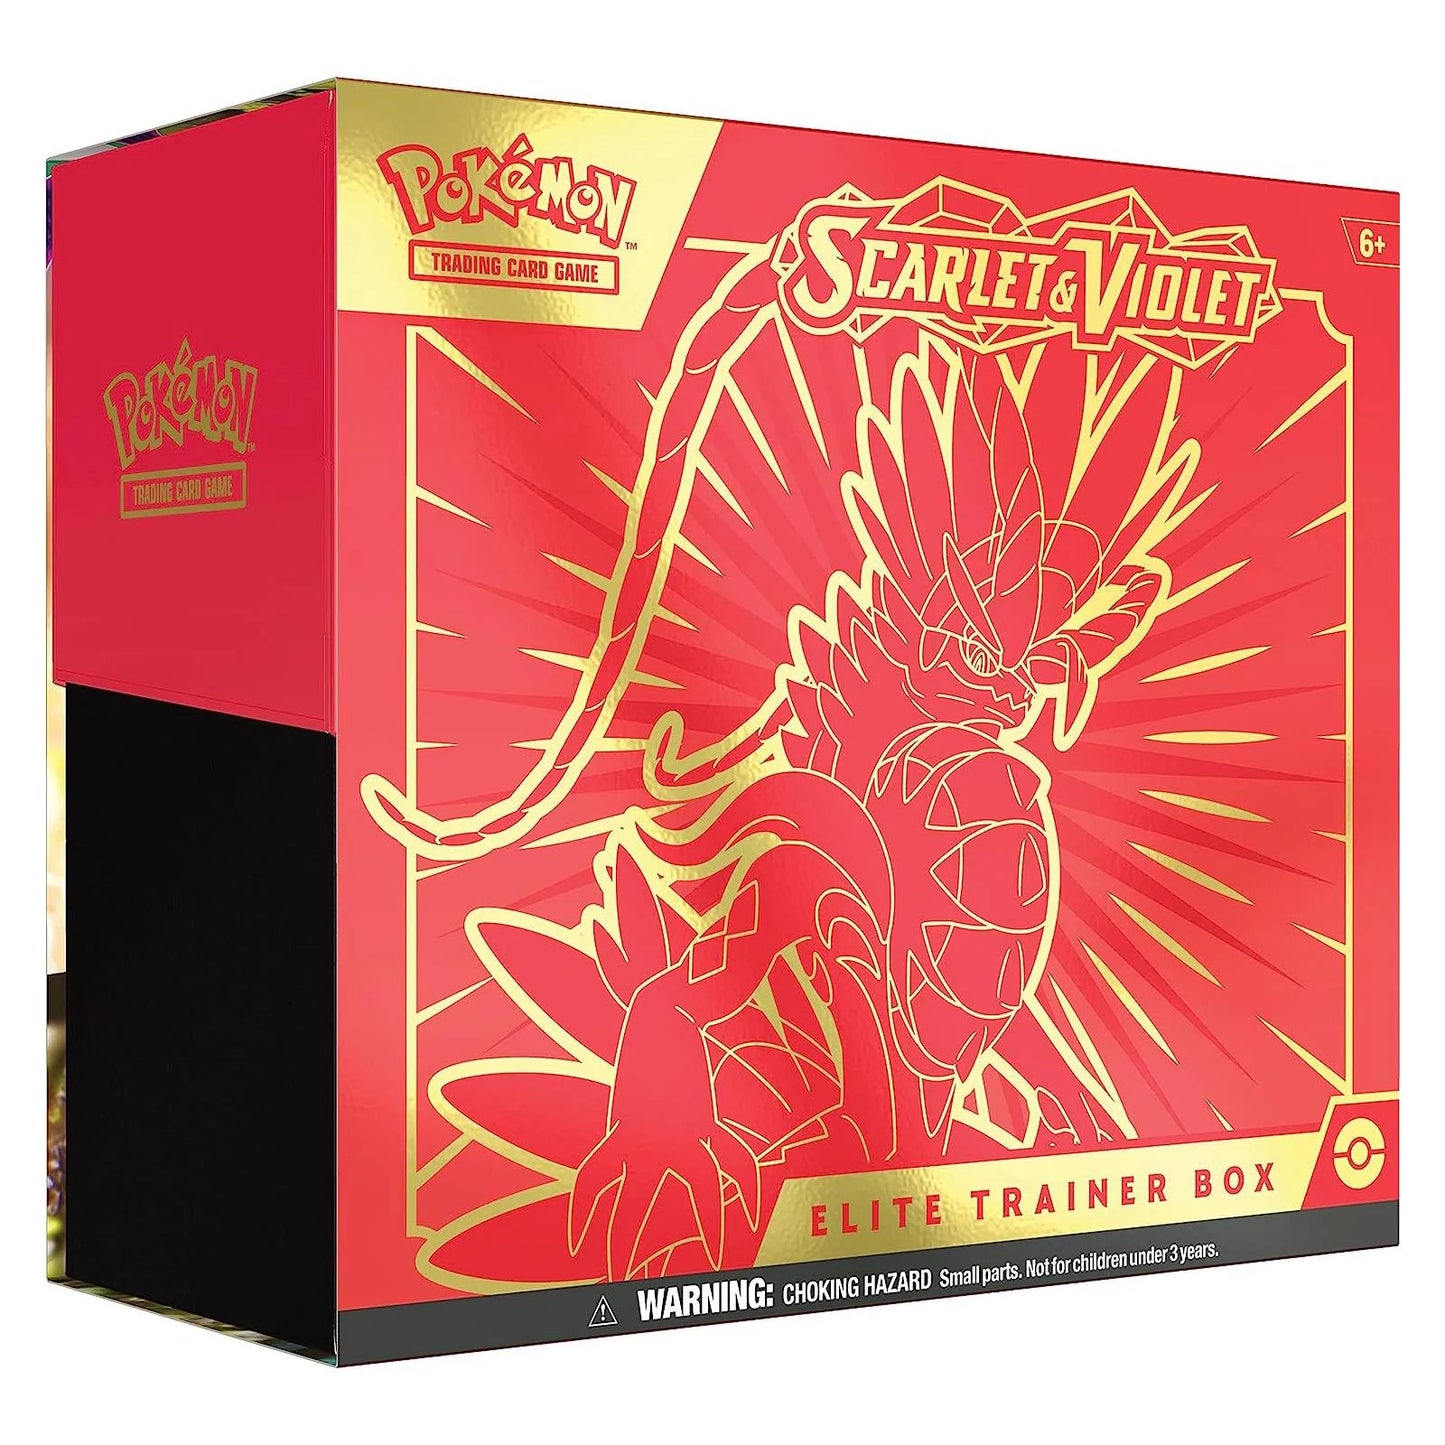 Pokemon Scarlet & Violet Elite Trainer Box - Base Set